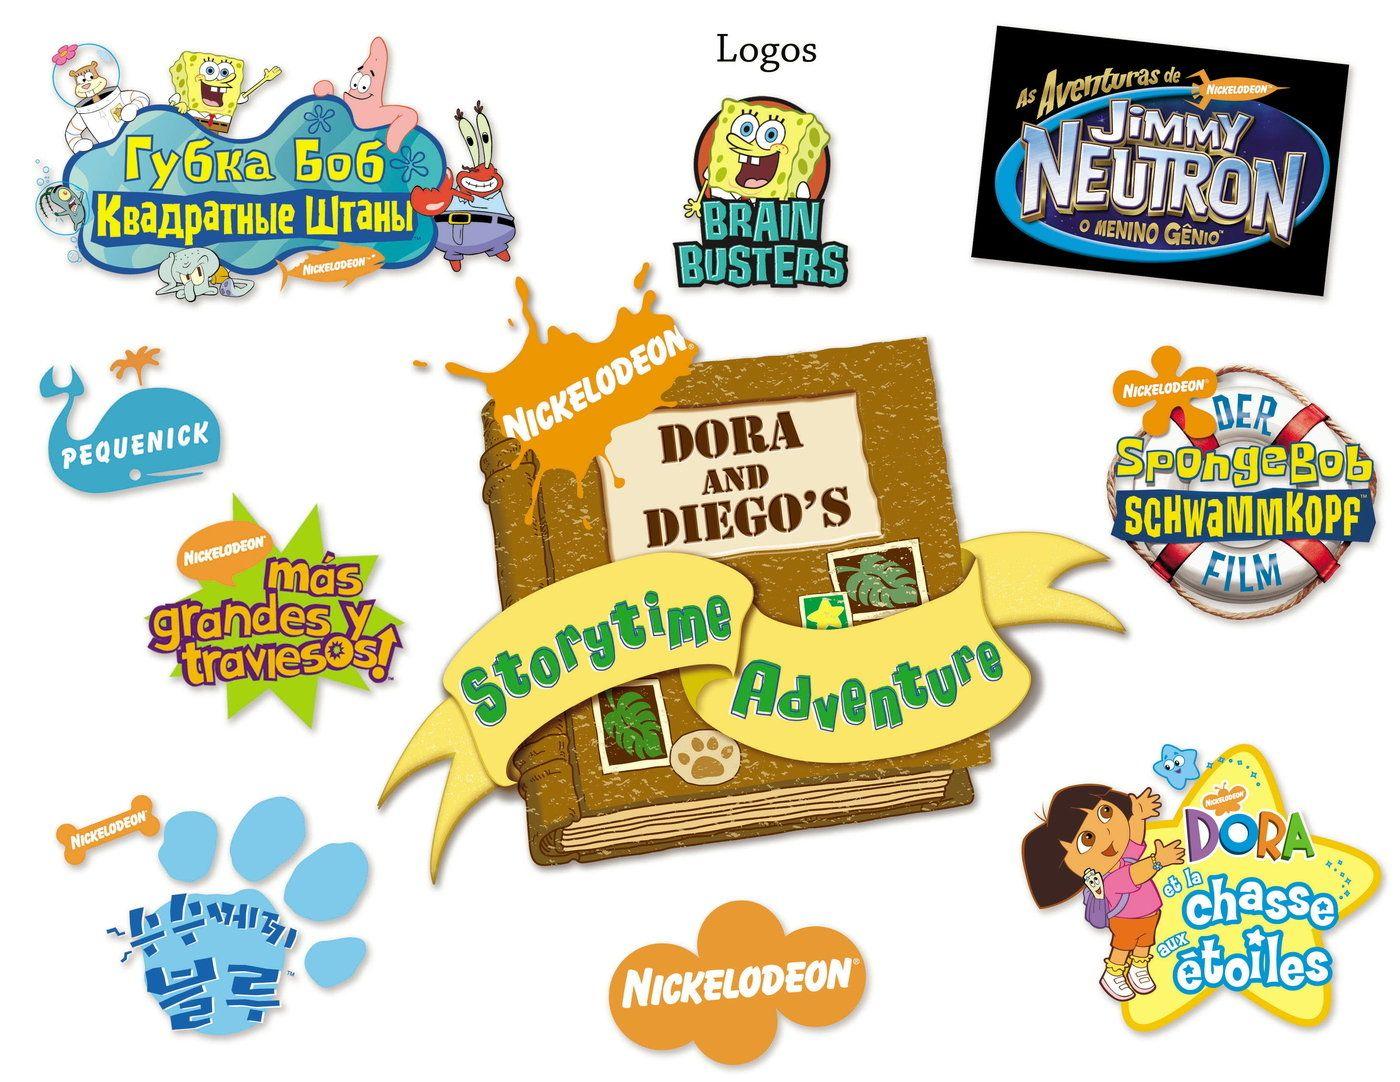 Old Spongebob Logo - Nickelodeon Product Development & Packaging Design